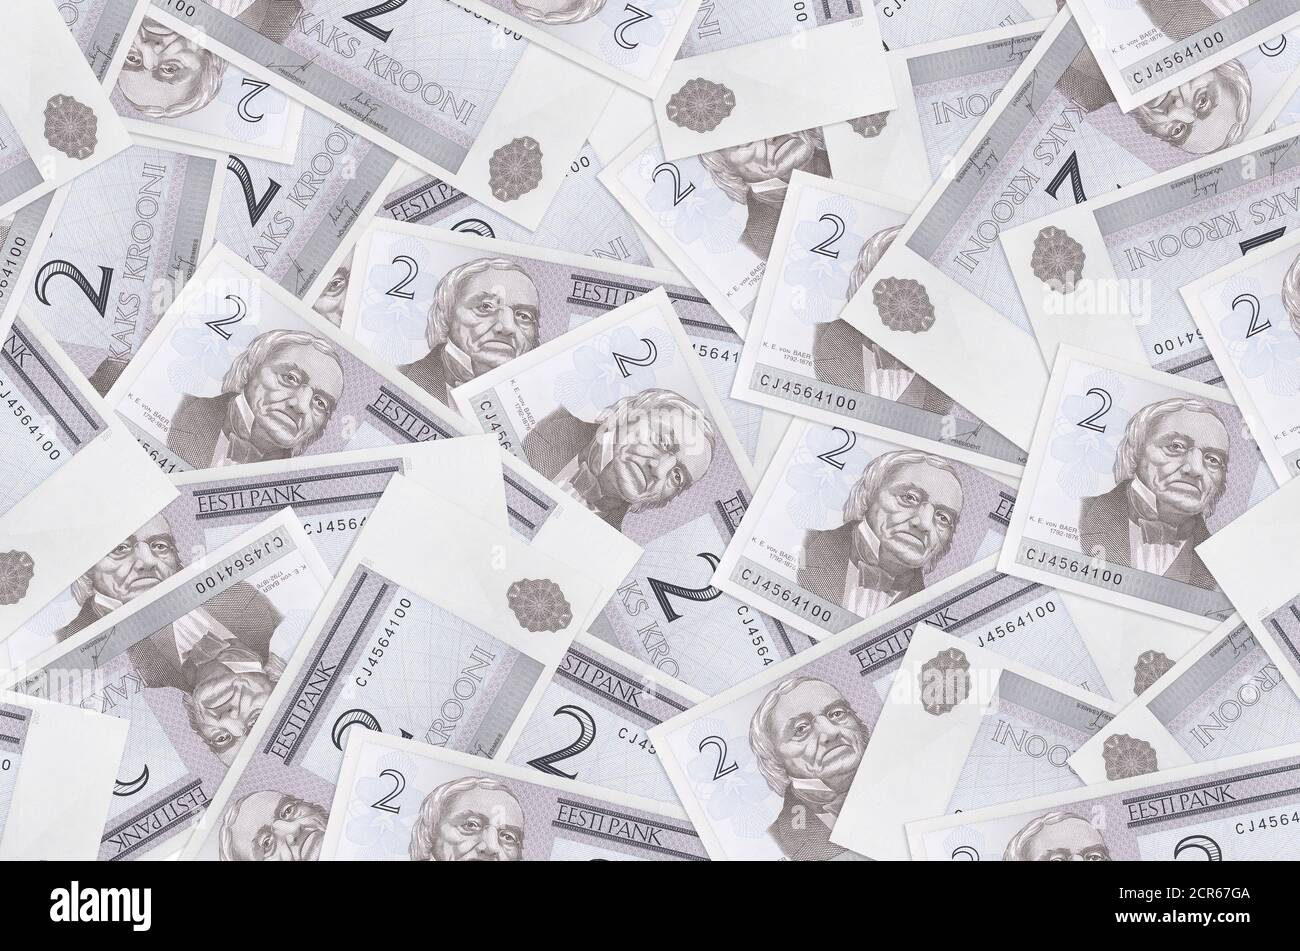 2 Estonian kroon bills lies in big pile. Rich life conceptual background. Big amount of money Stock Photo